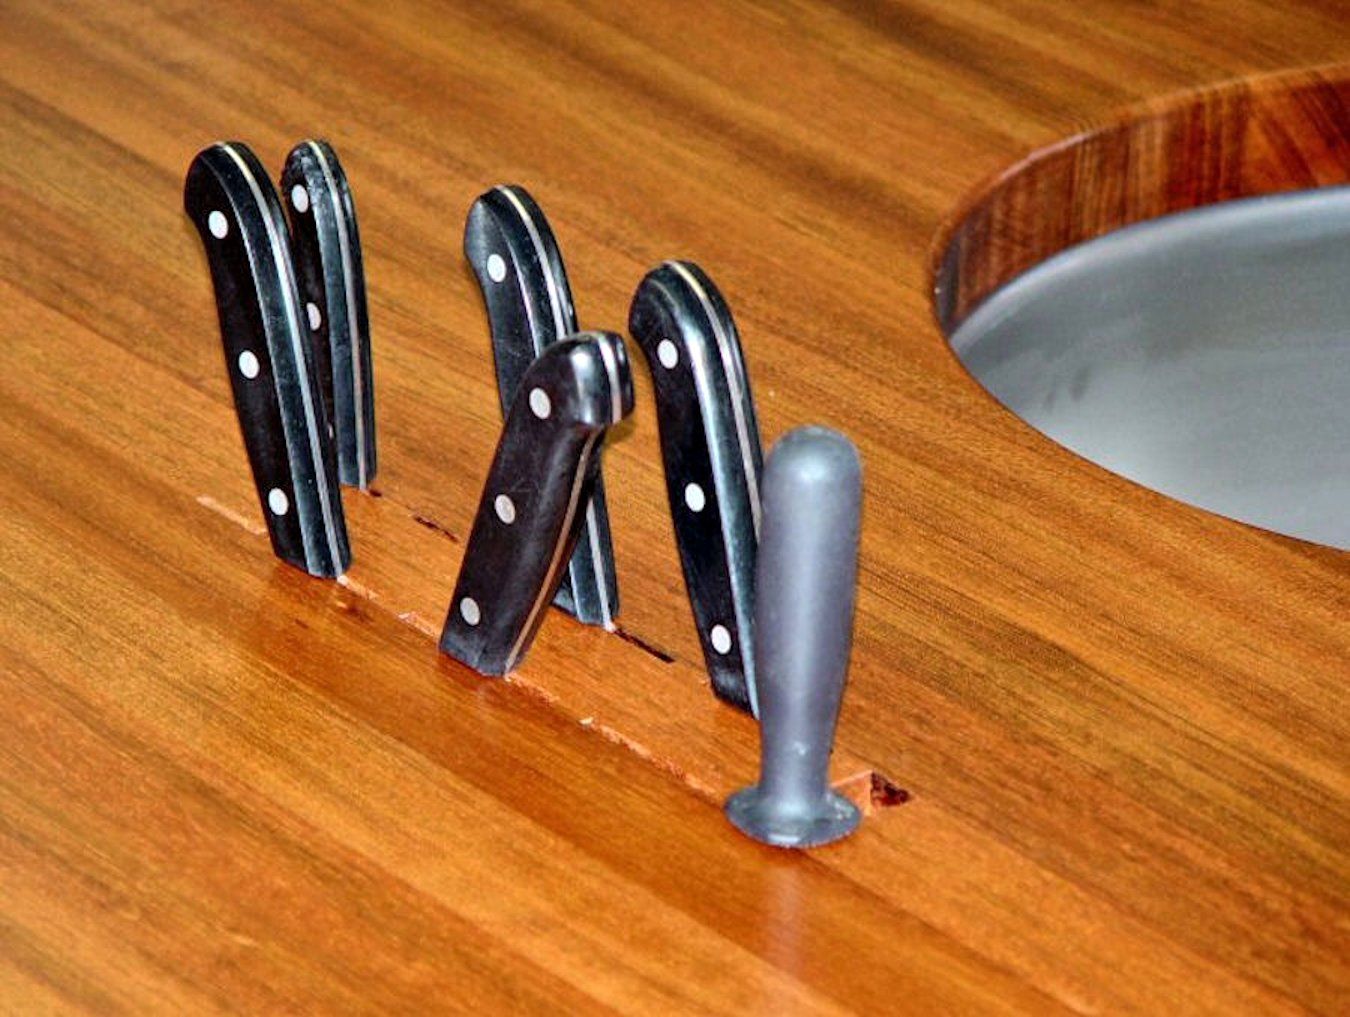 Custom Wood Countertop Options - Knife Storage